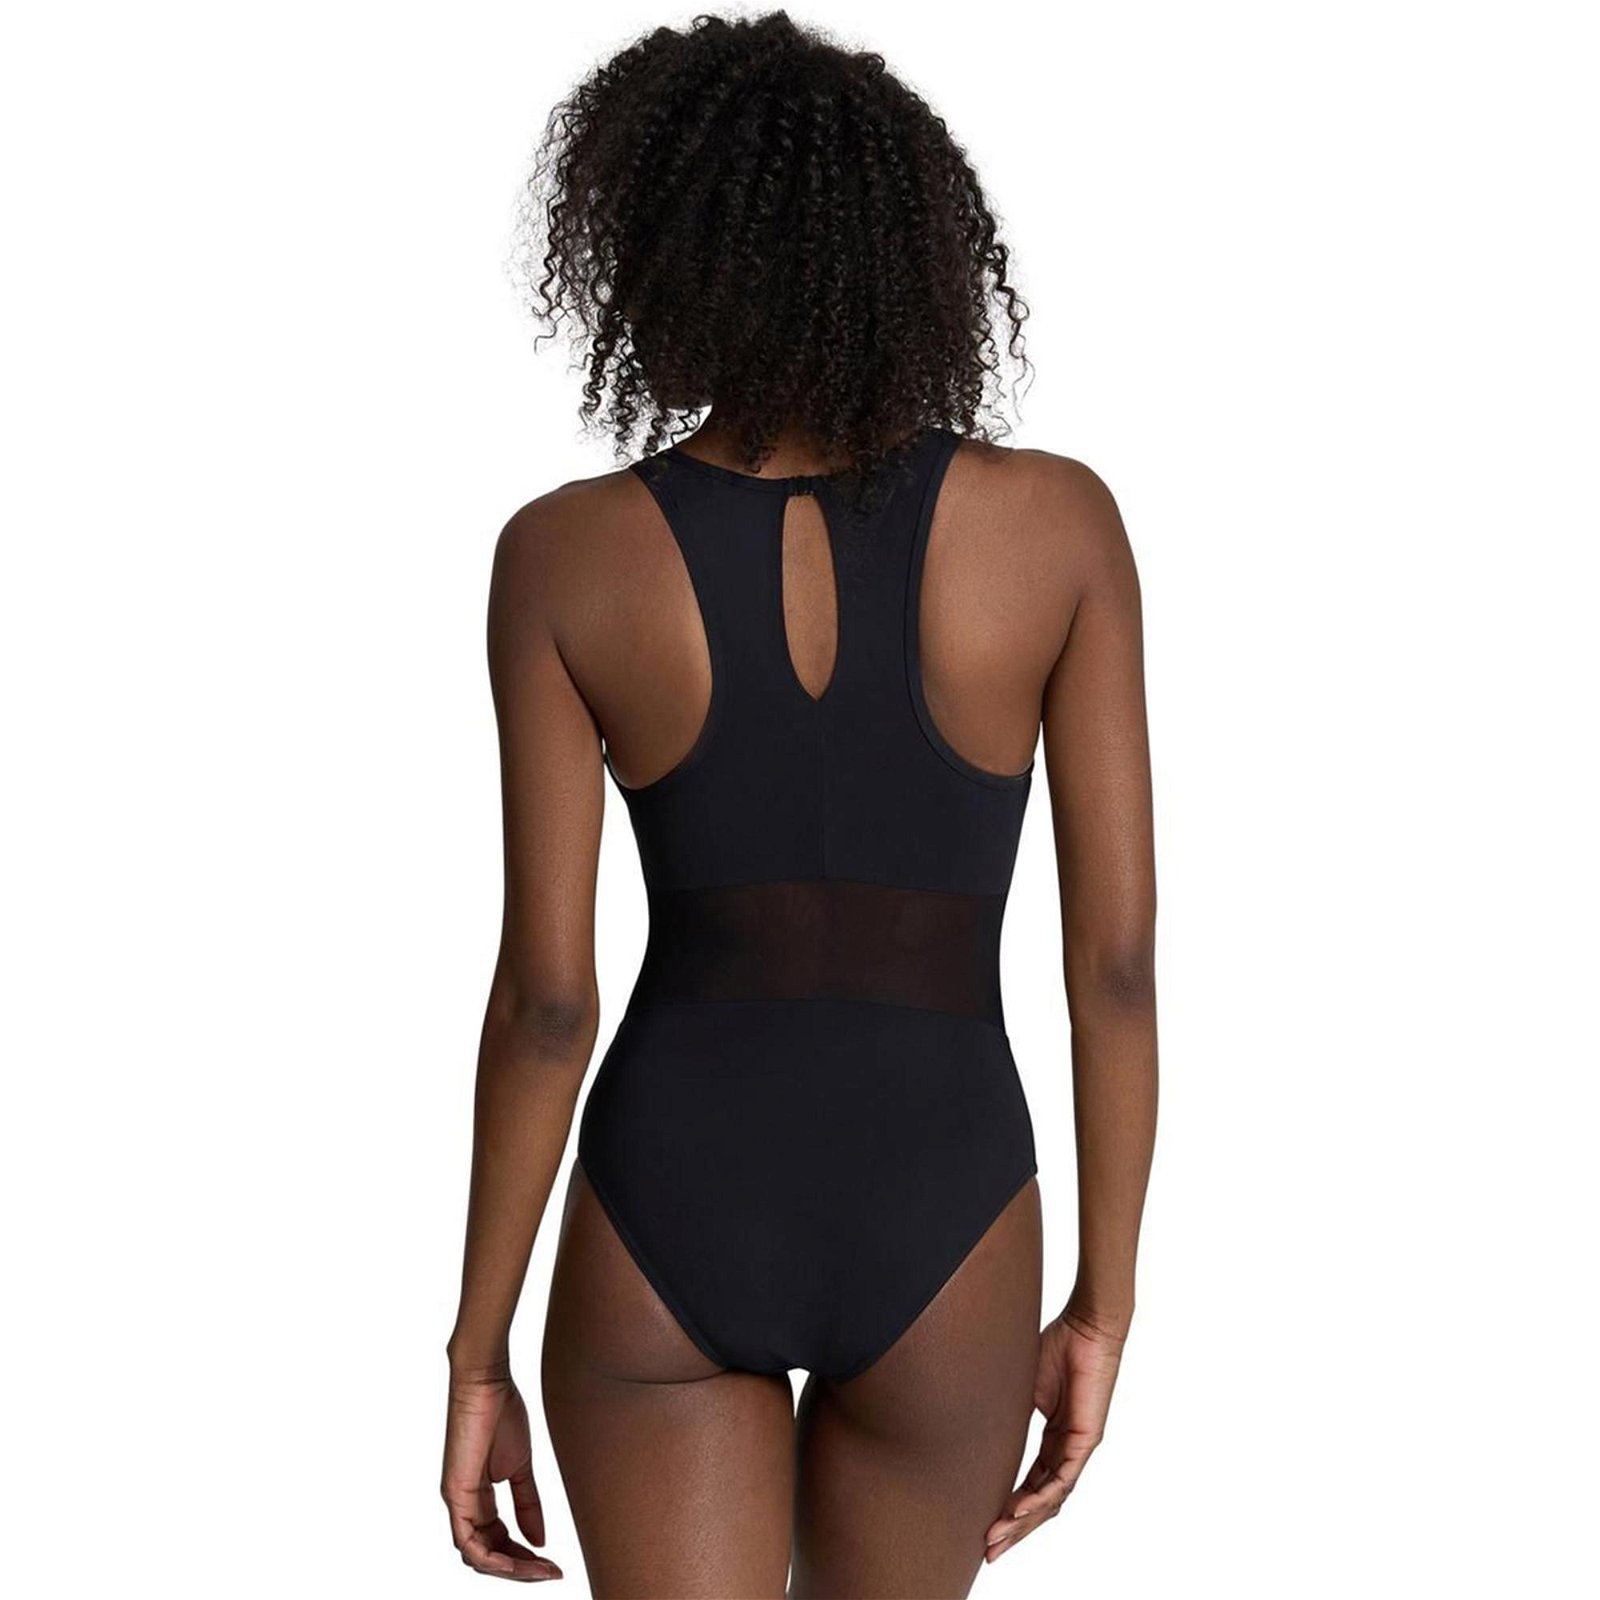 Mesh Panels Swimsuit Vent Kadın Siyah Yüzücü Mayosu 006658500